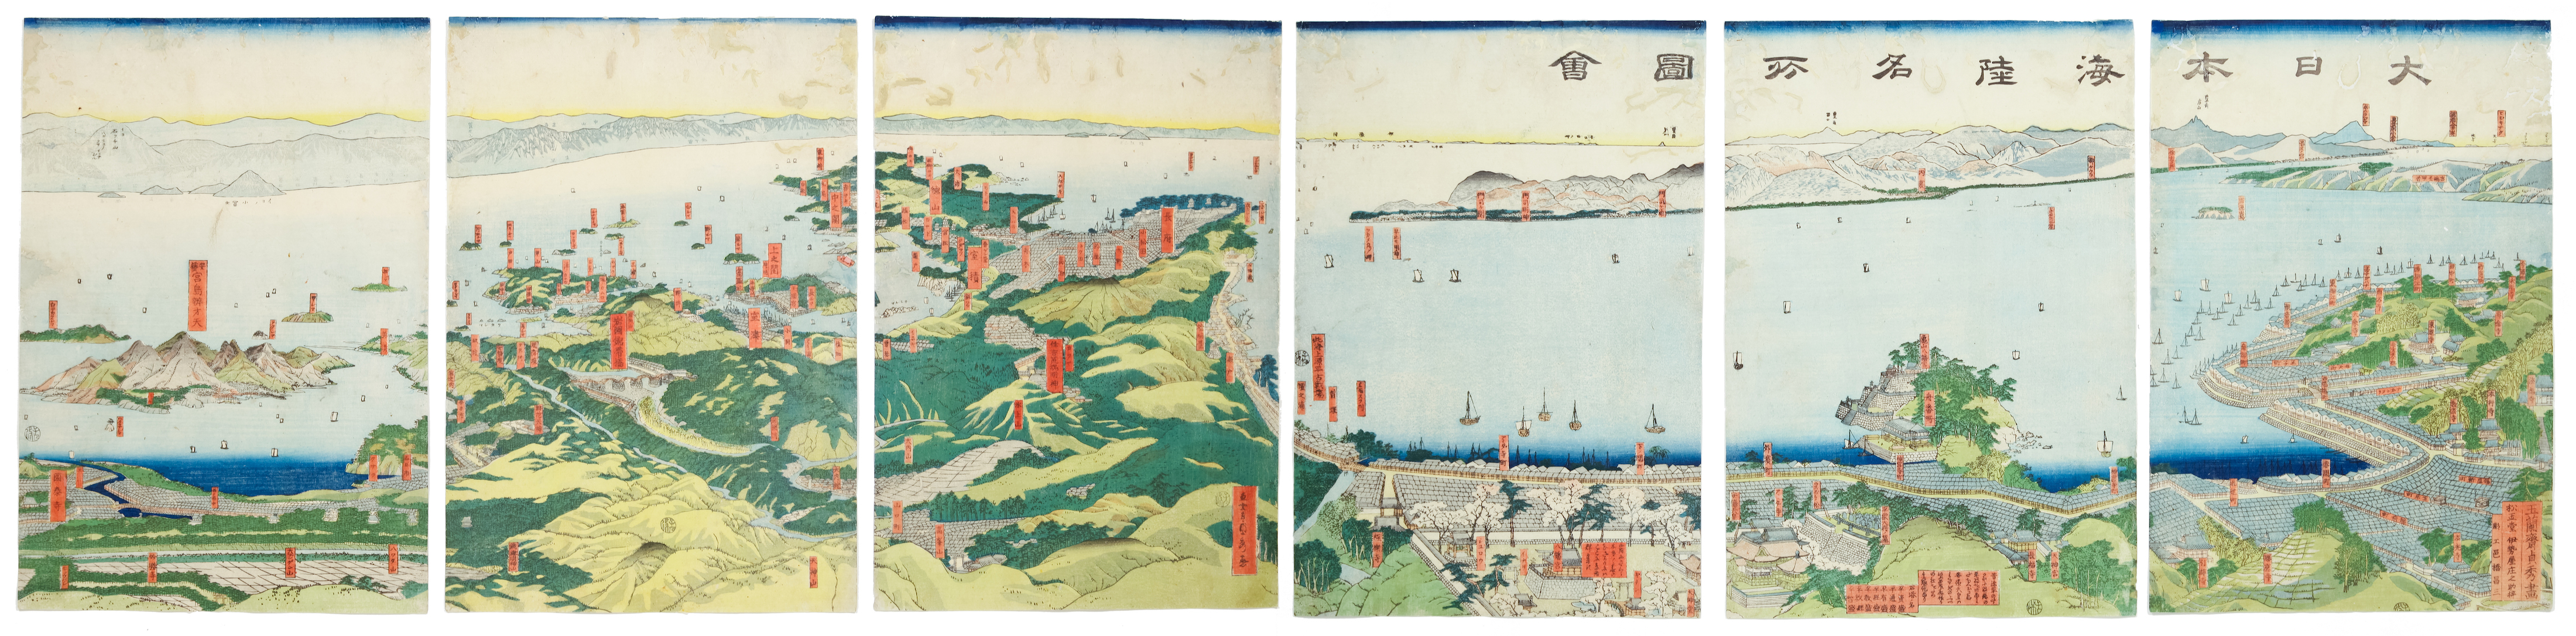 Sadahide, Hiroshima, Original Japanese Woodblock Print